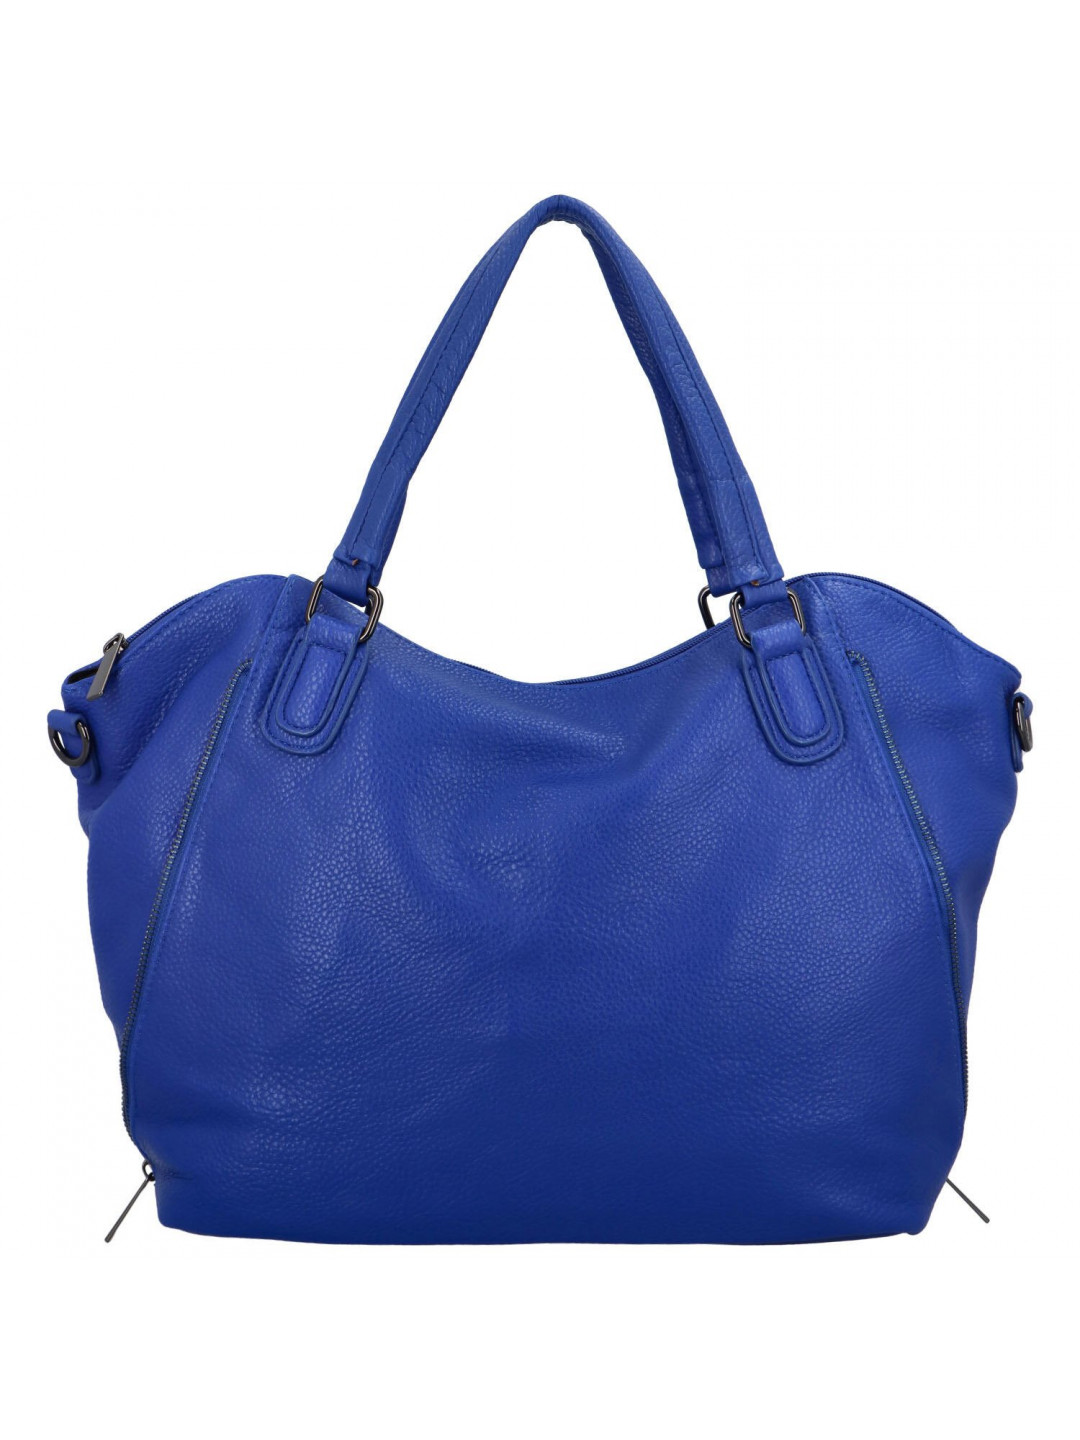 Dámská kabelka na rameno modrá – Paolo bags Wahidas